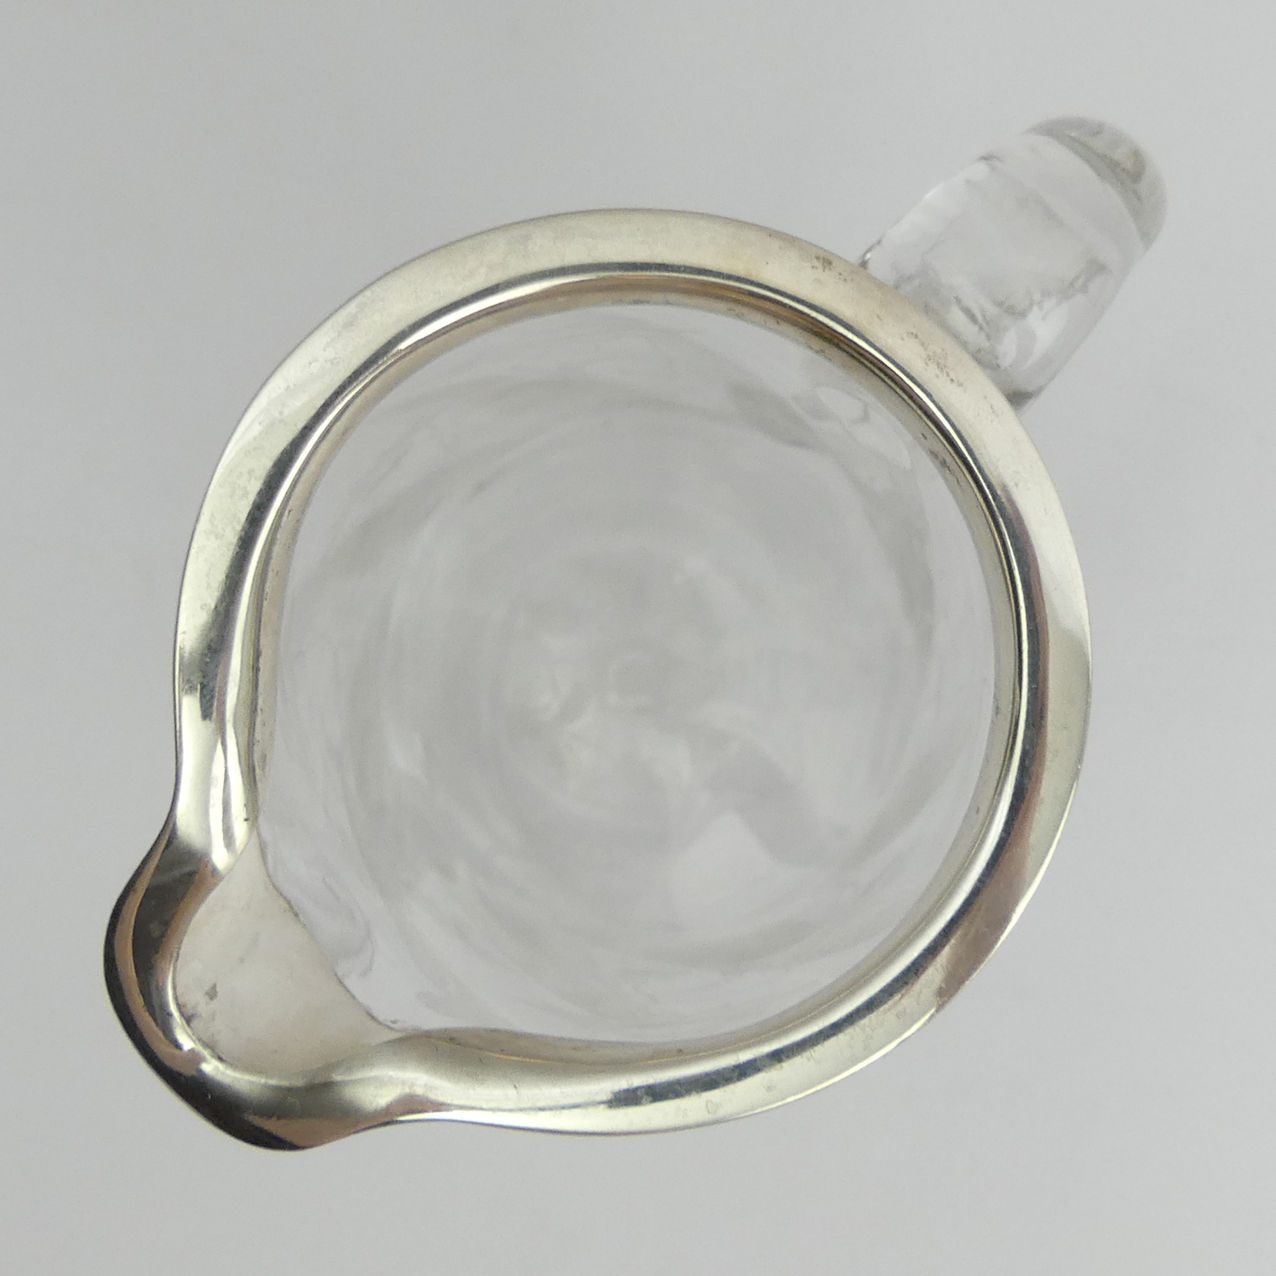 Art Nouveau silver mounted glass engraved glass water jug, Thomas Latham & Ernest Morton, Birm. - Image 4 of 5